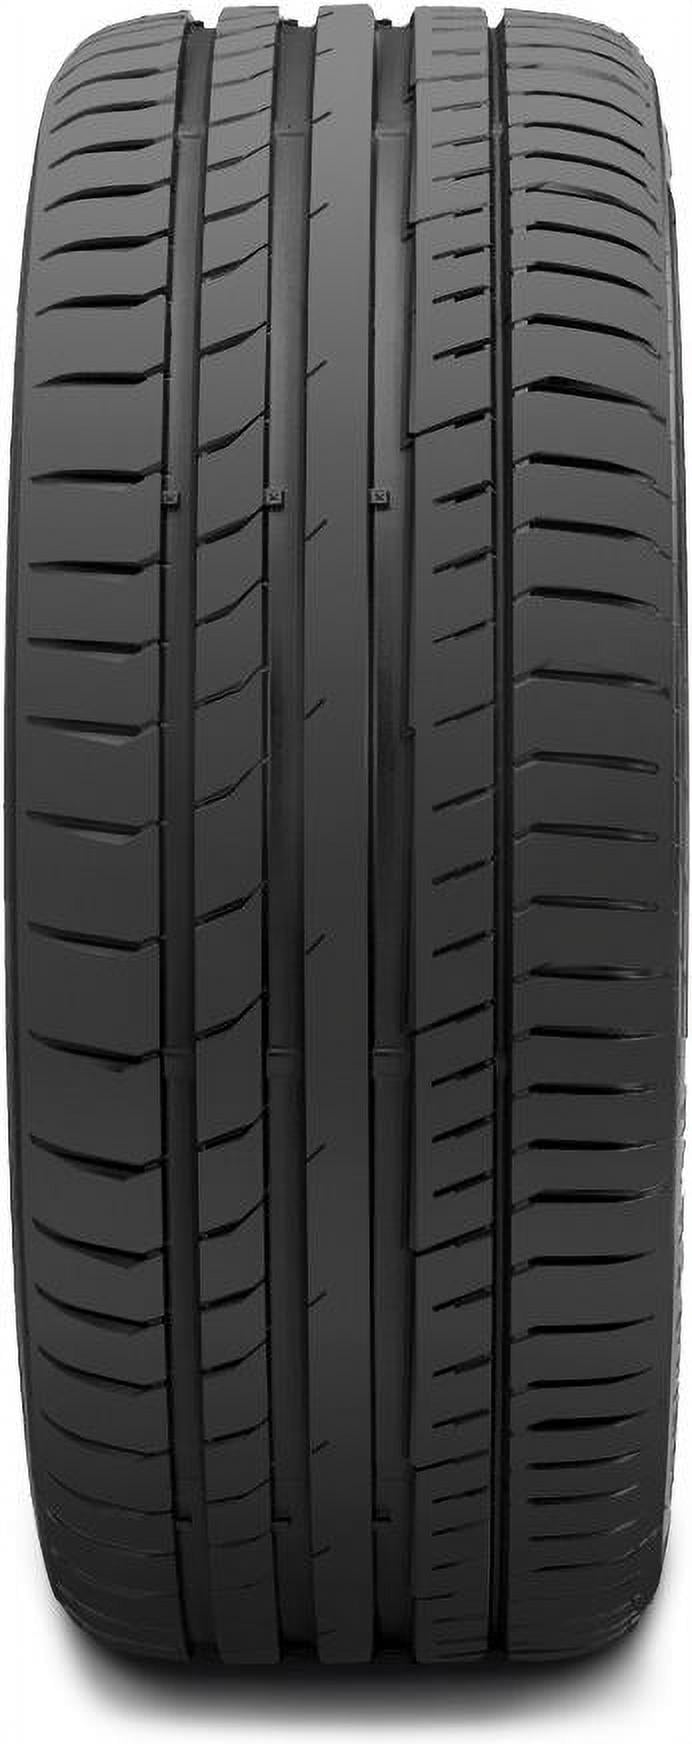 Continental Tyres / Car / Continental ContiSportContact 5 Continental Conti  Sport Contact 5 225/45 R17 91W (MO) FR TL Fuel Eff.: C Wet Grip: B  NoiseClass: B Noise: 71dB Car Tyres 